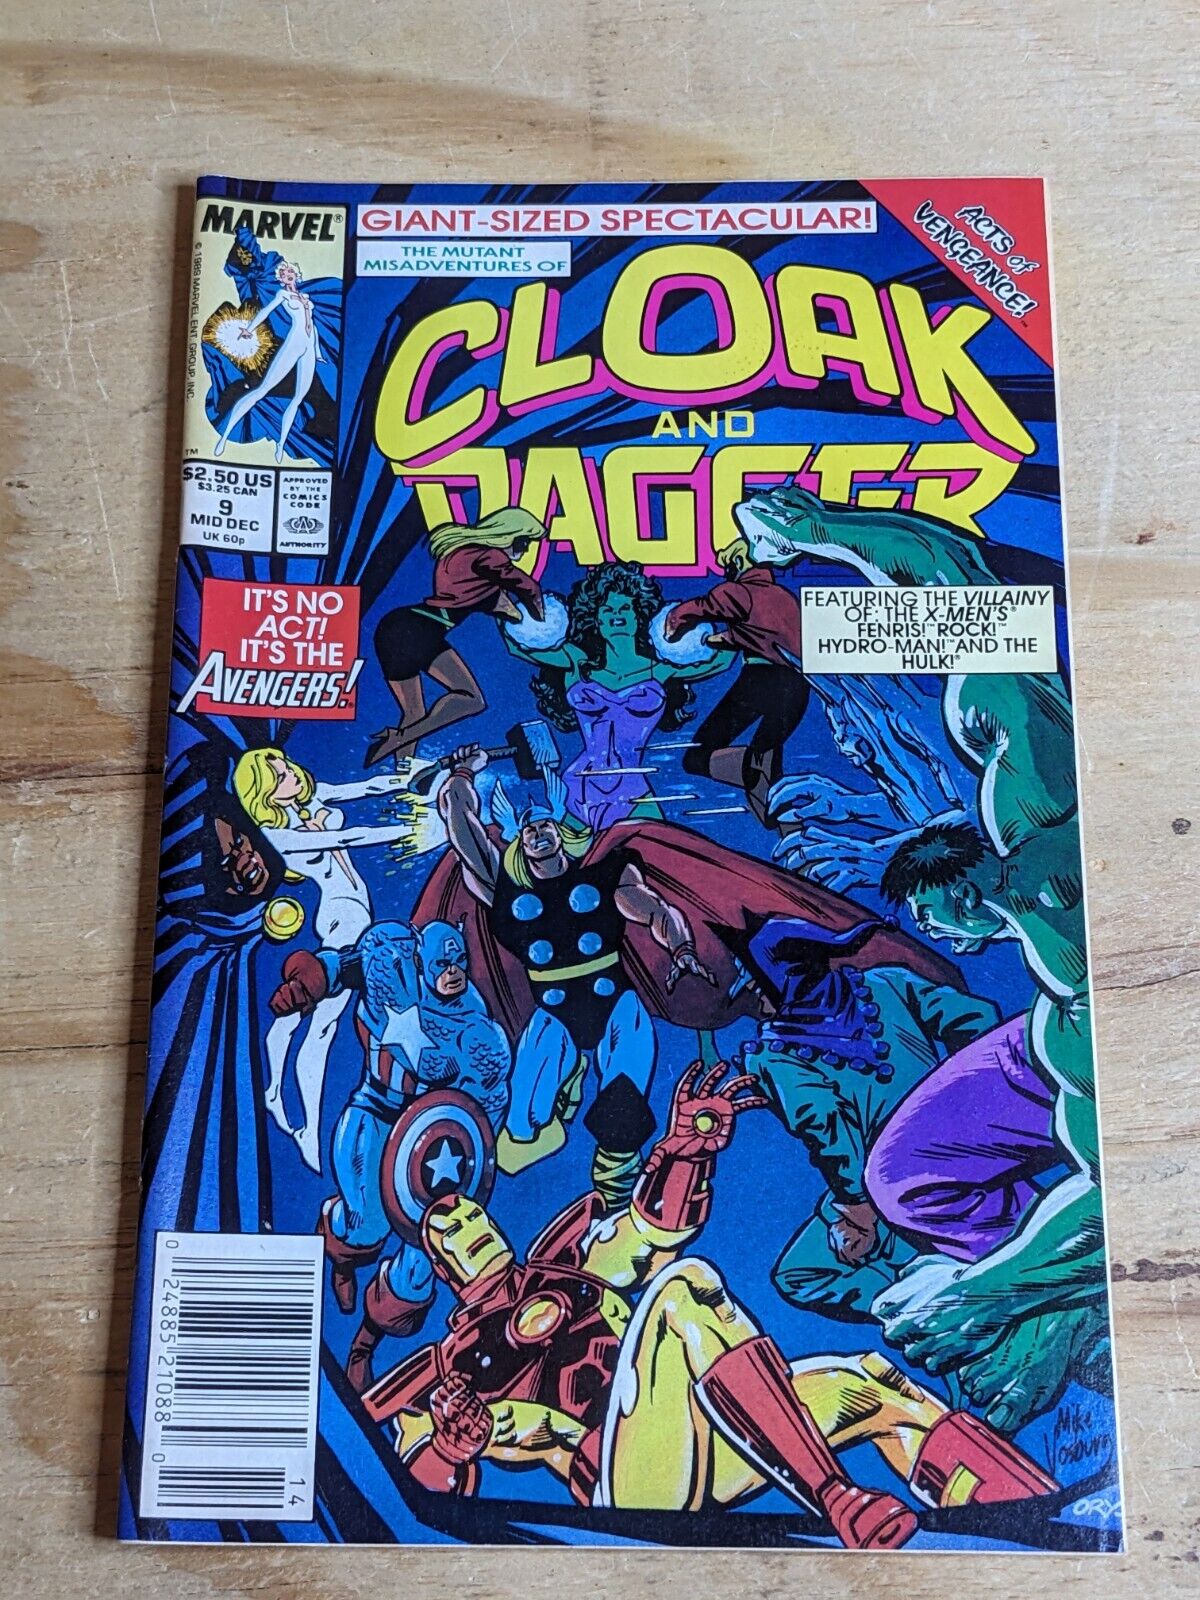 Mutant Misadventures of Cloak and Dagger #9 Marvel Comics December 1989